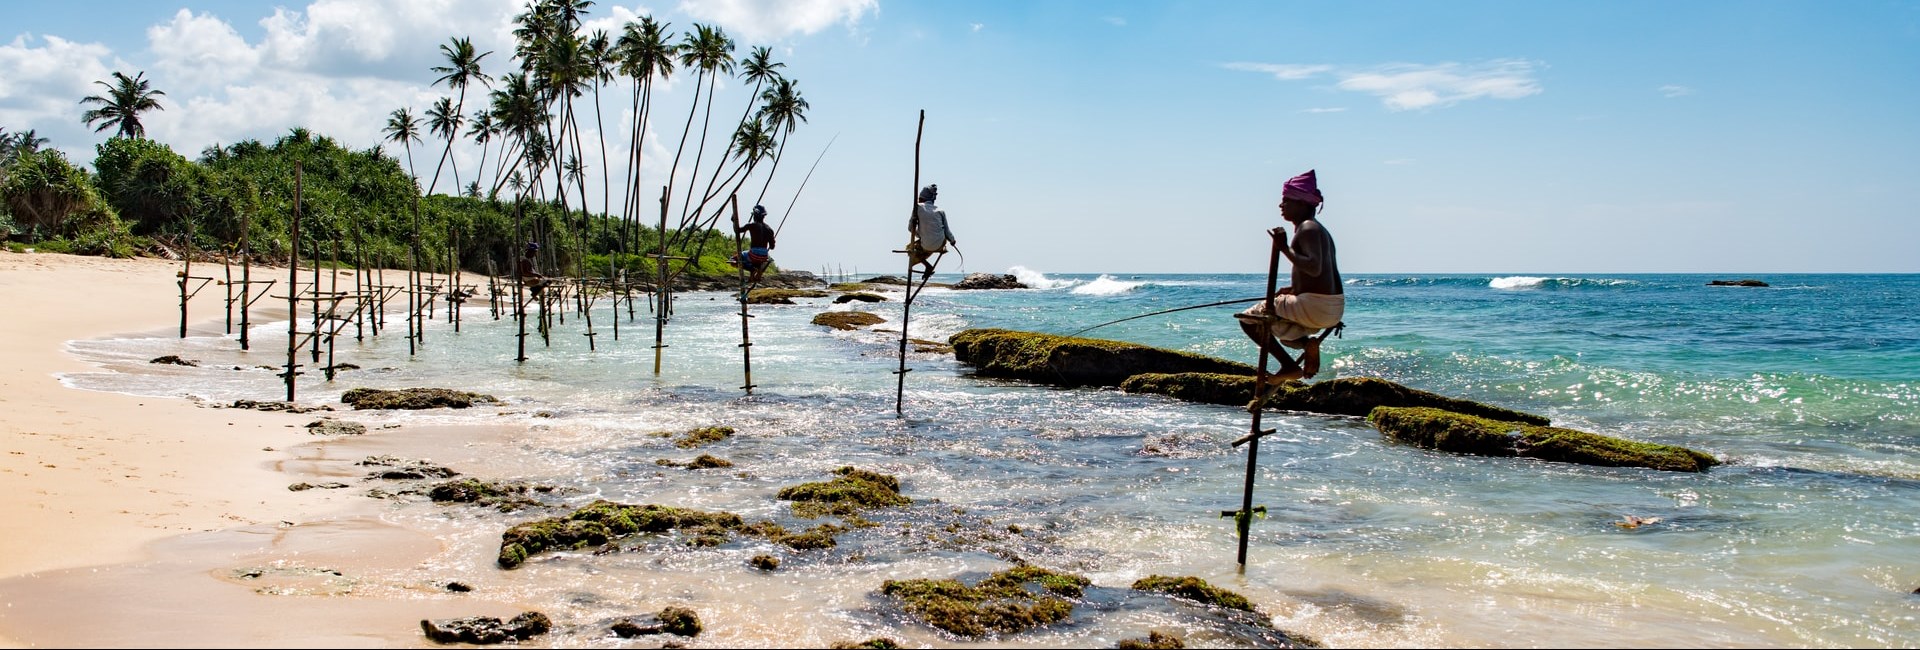 Sri Lanken men standing on sticks with a fishing pole on a wild beach